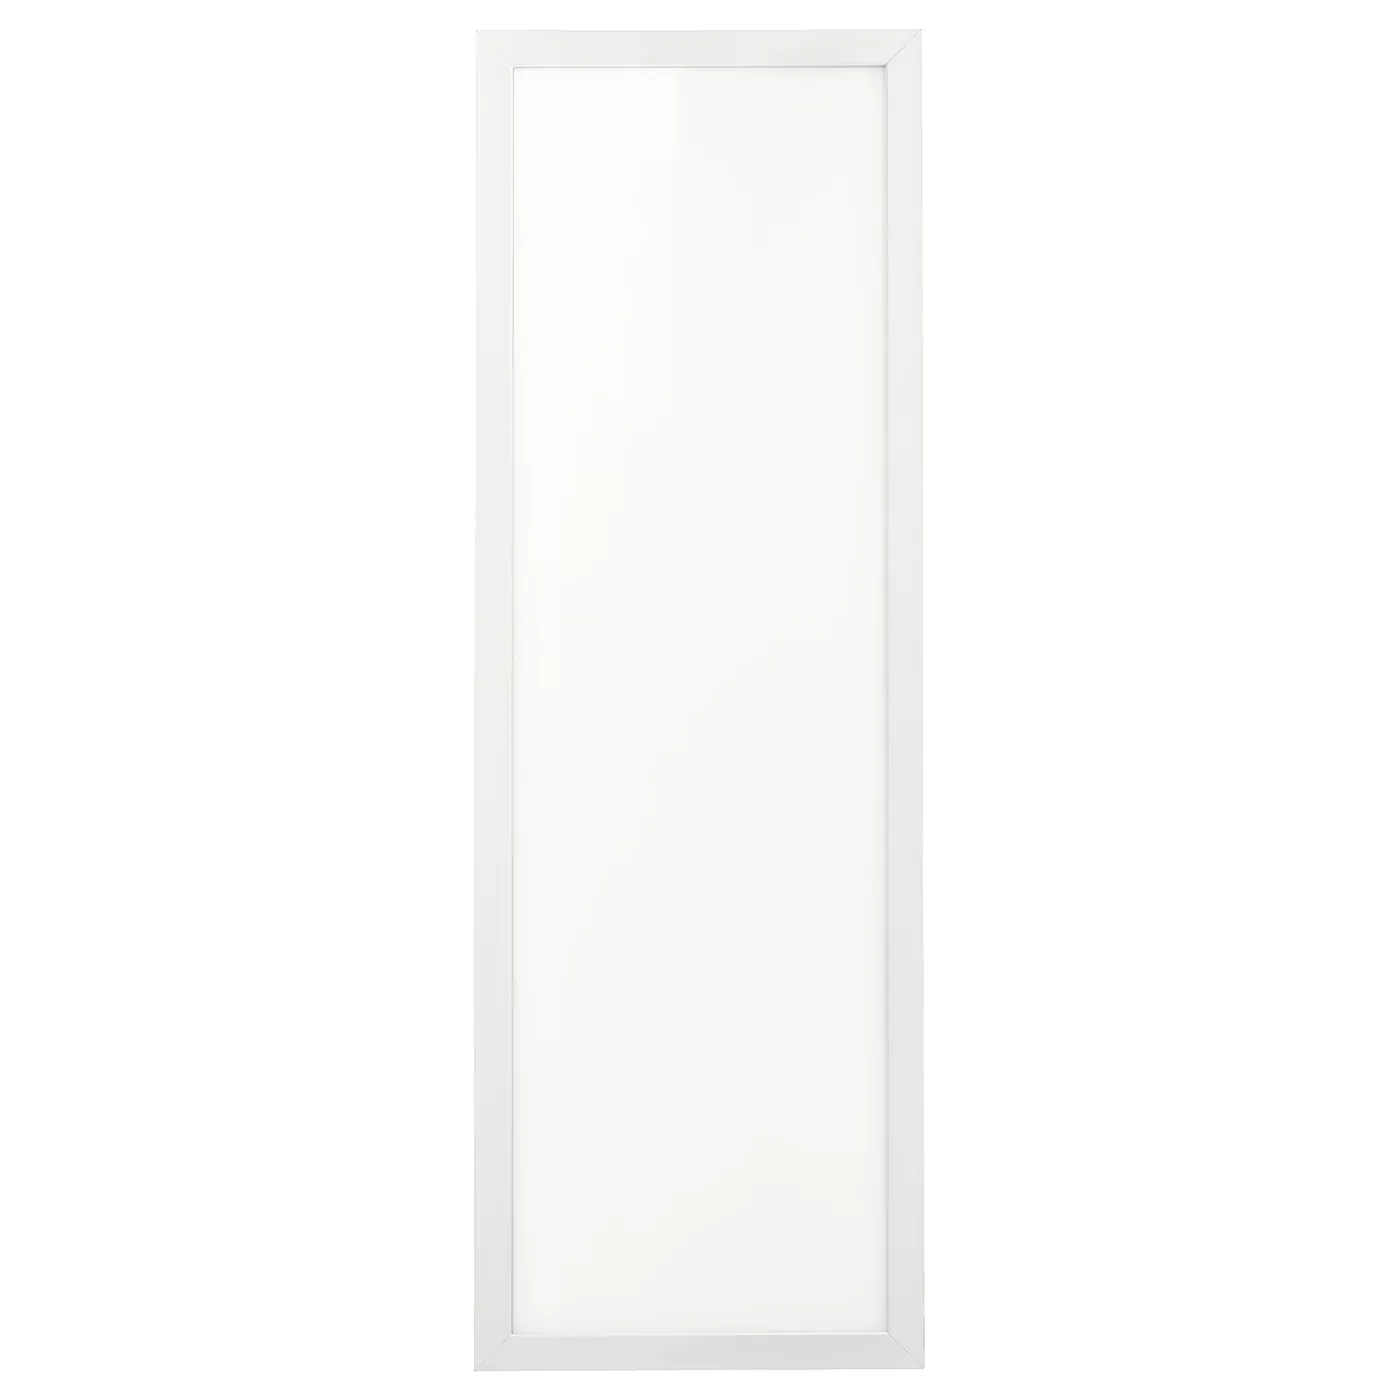 Belly questionnaire property IKEA Floalt LED Light Panel 30x90 cm L1528 Zigbee compatibility